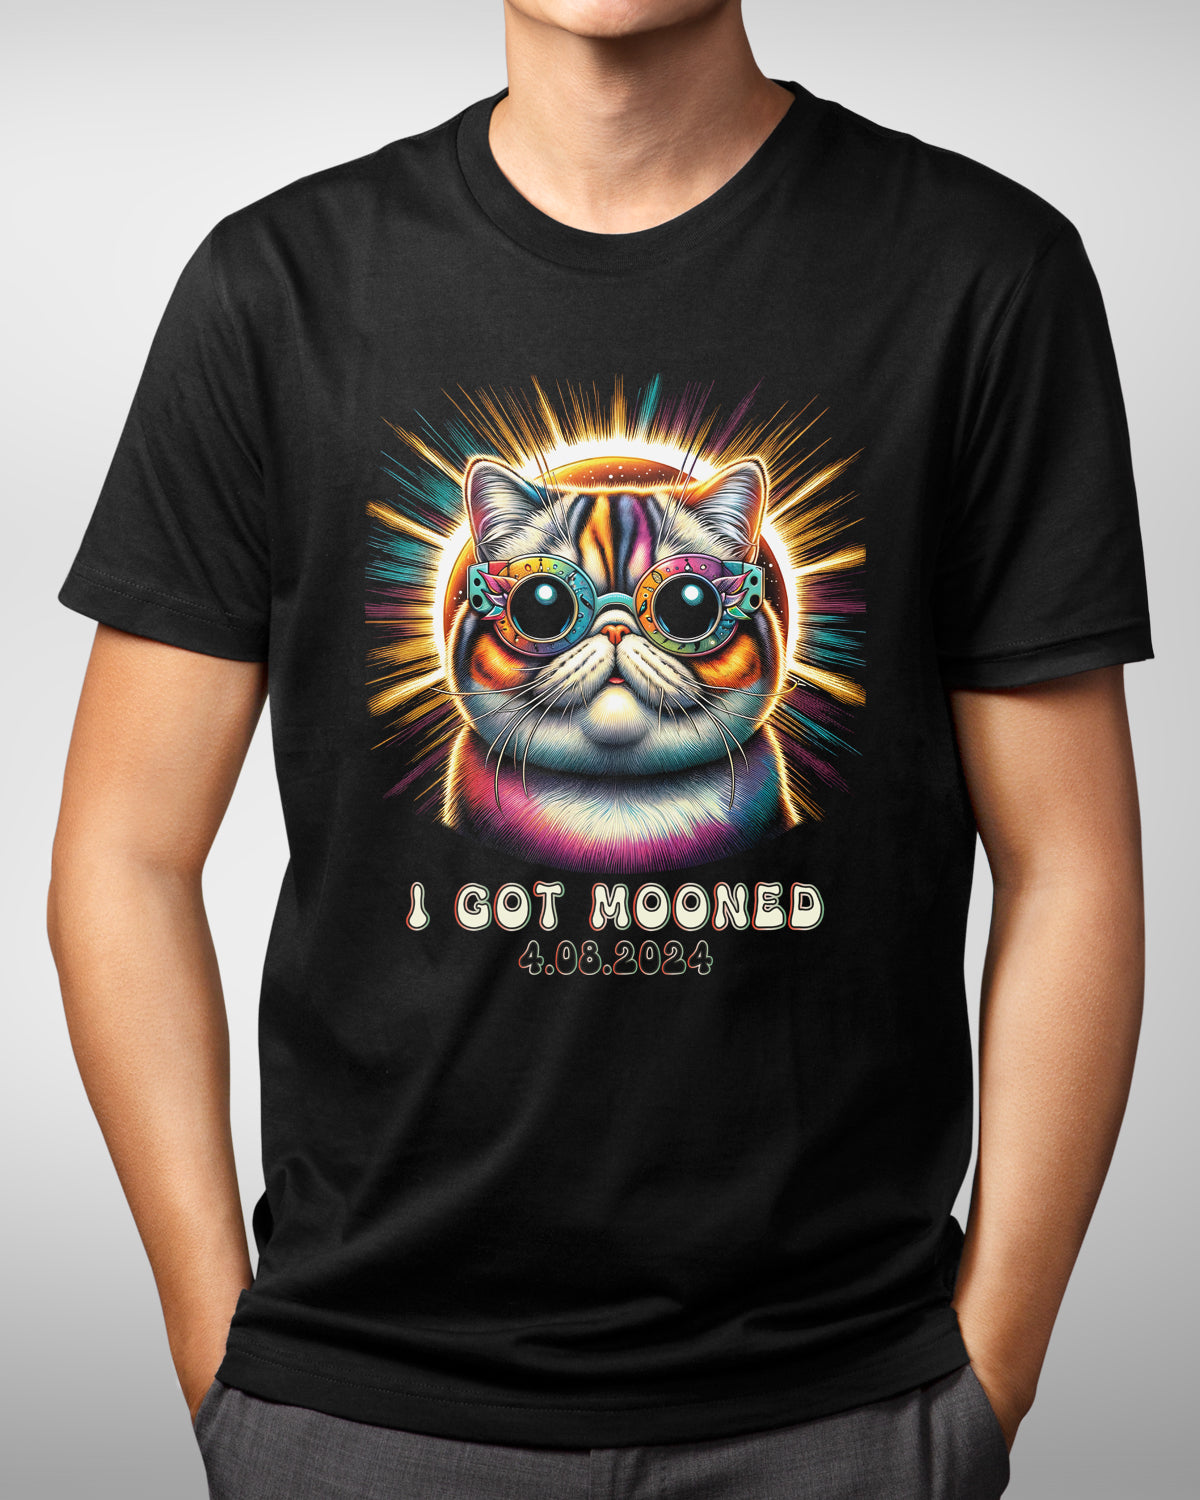 I Got Mooned Total Solar Eclipse 2024 Cat Shirt, Funny Eclipse Viewer Feline Lover Tee, 4.08.24 Souvenir Gift